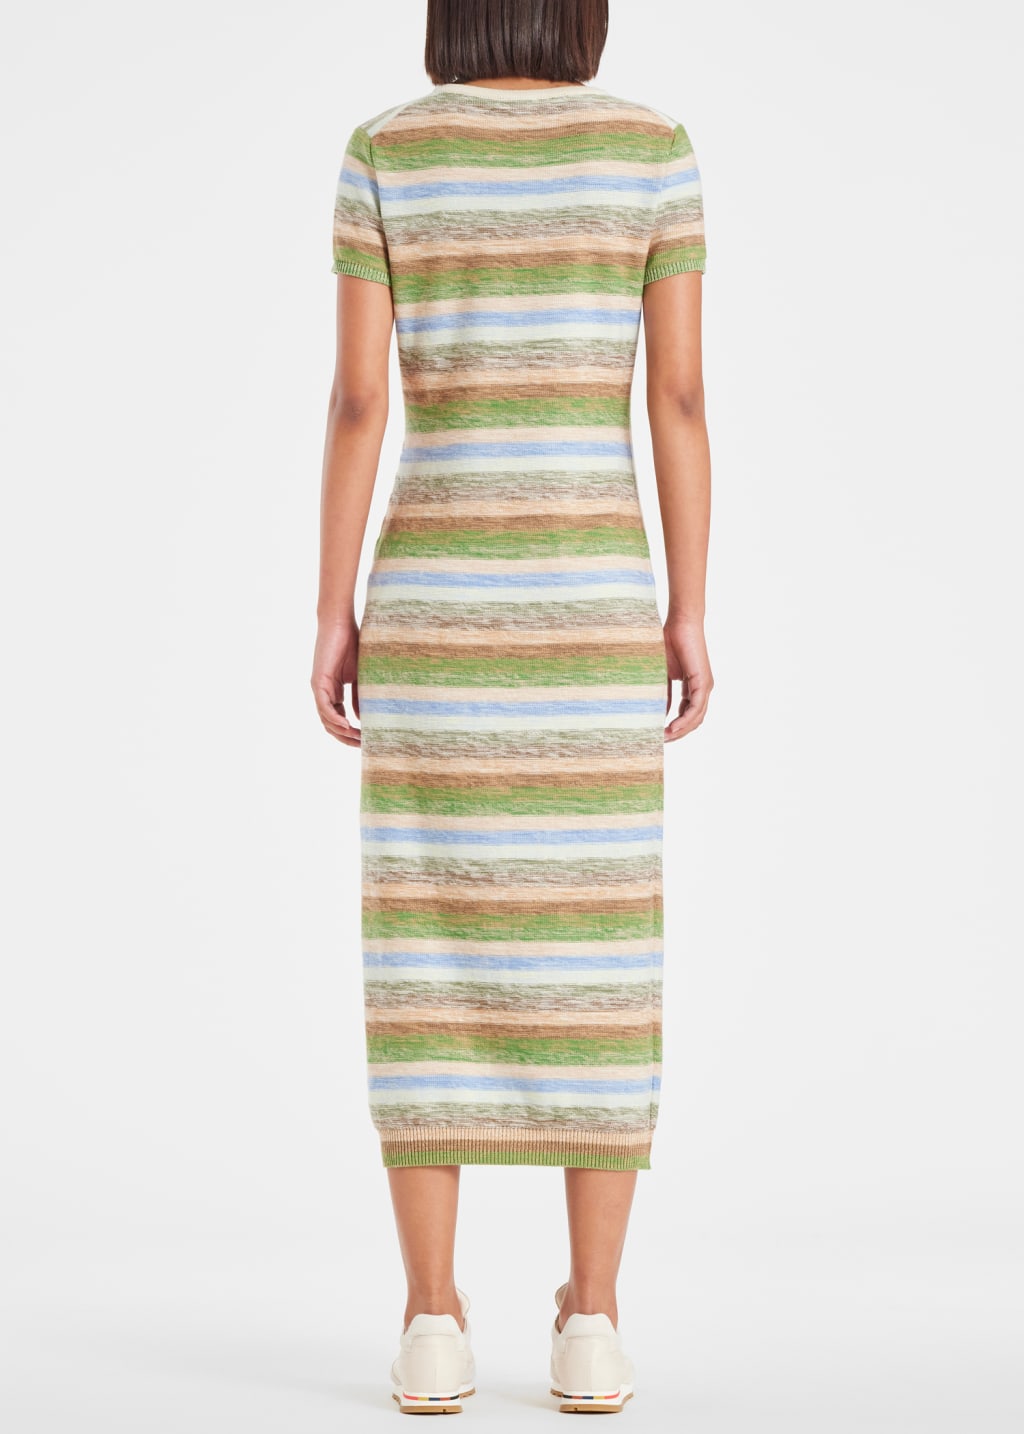 Model View - Women's Green Space Dye Knit Maxi Dress Paul Smith